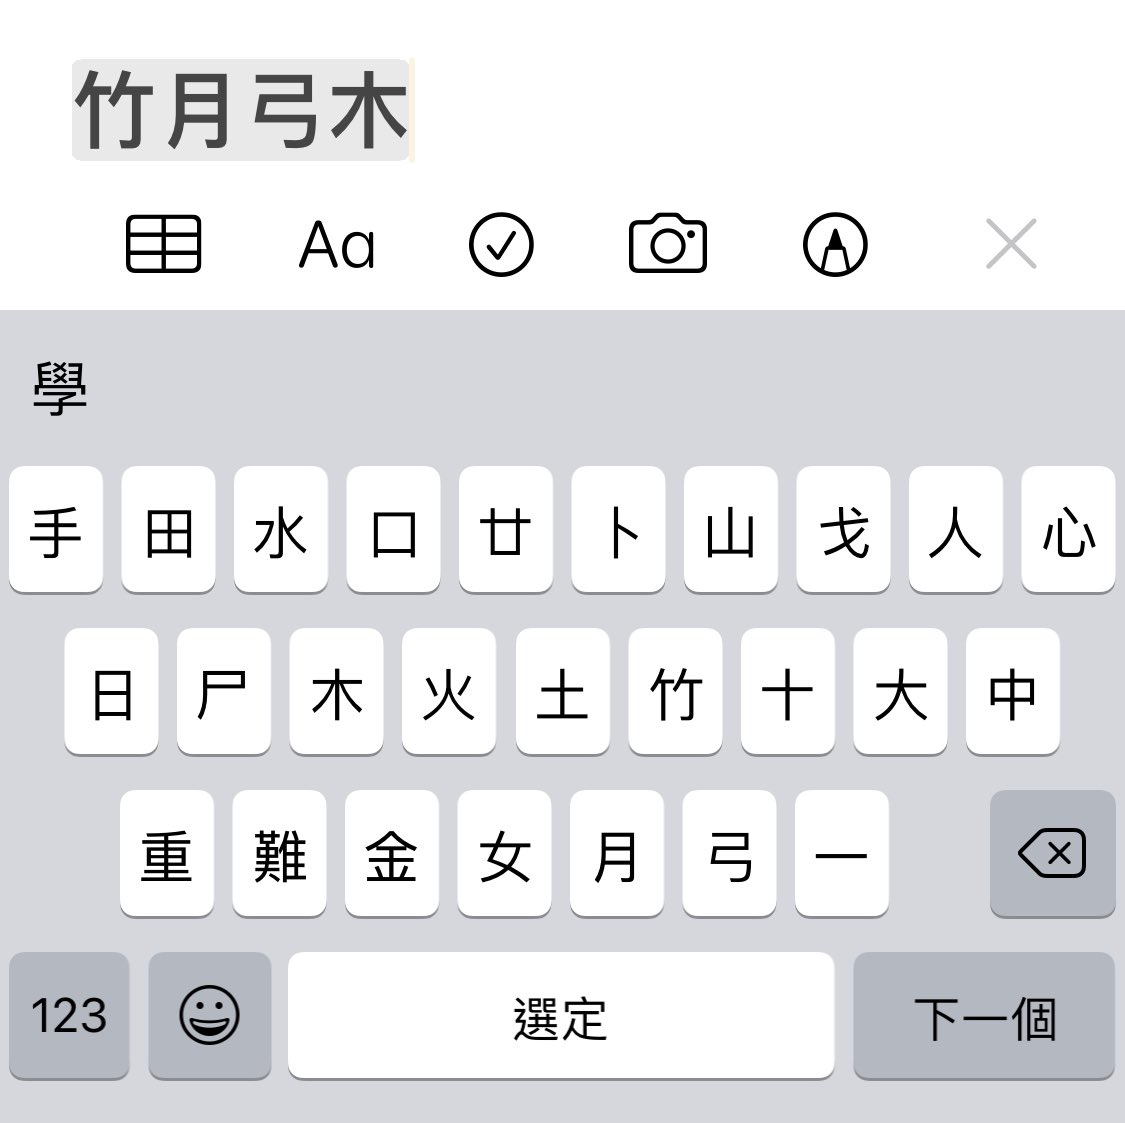 Jane Manchun Wong on X: Google translates my Cantonese tweet to